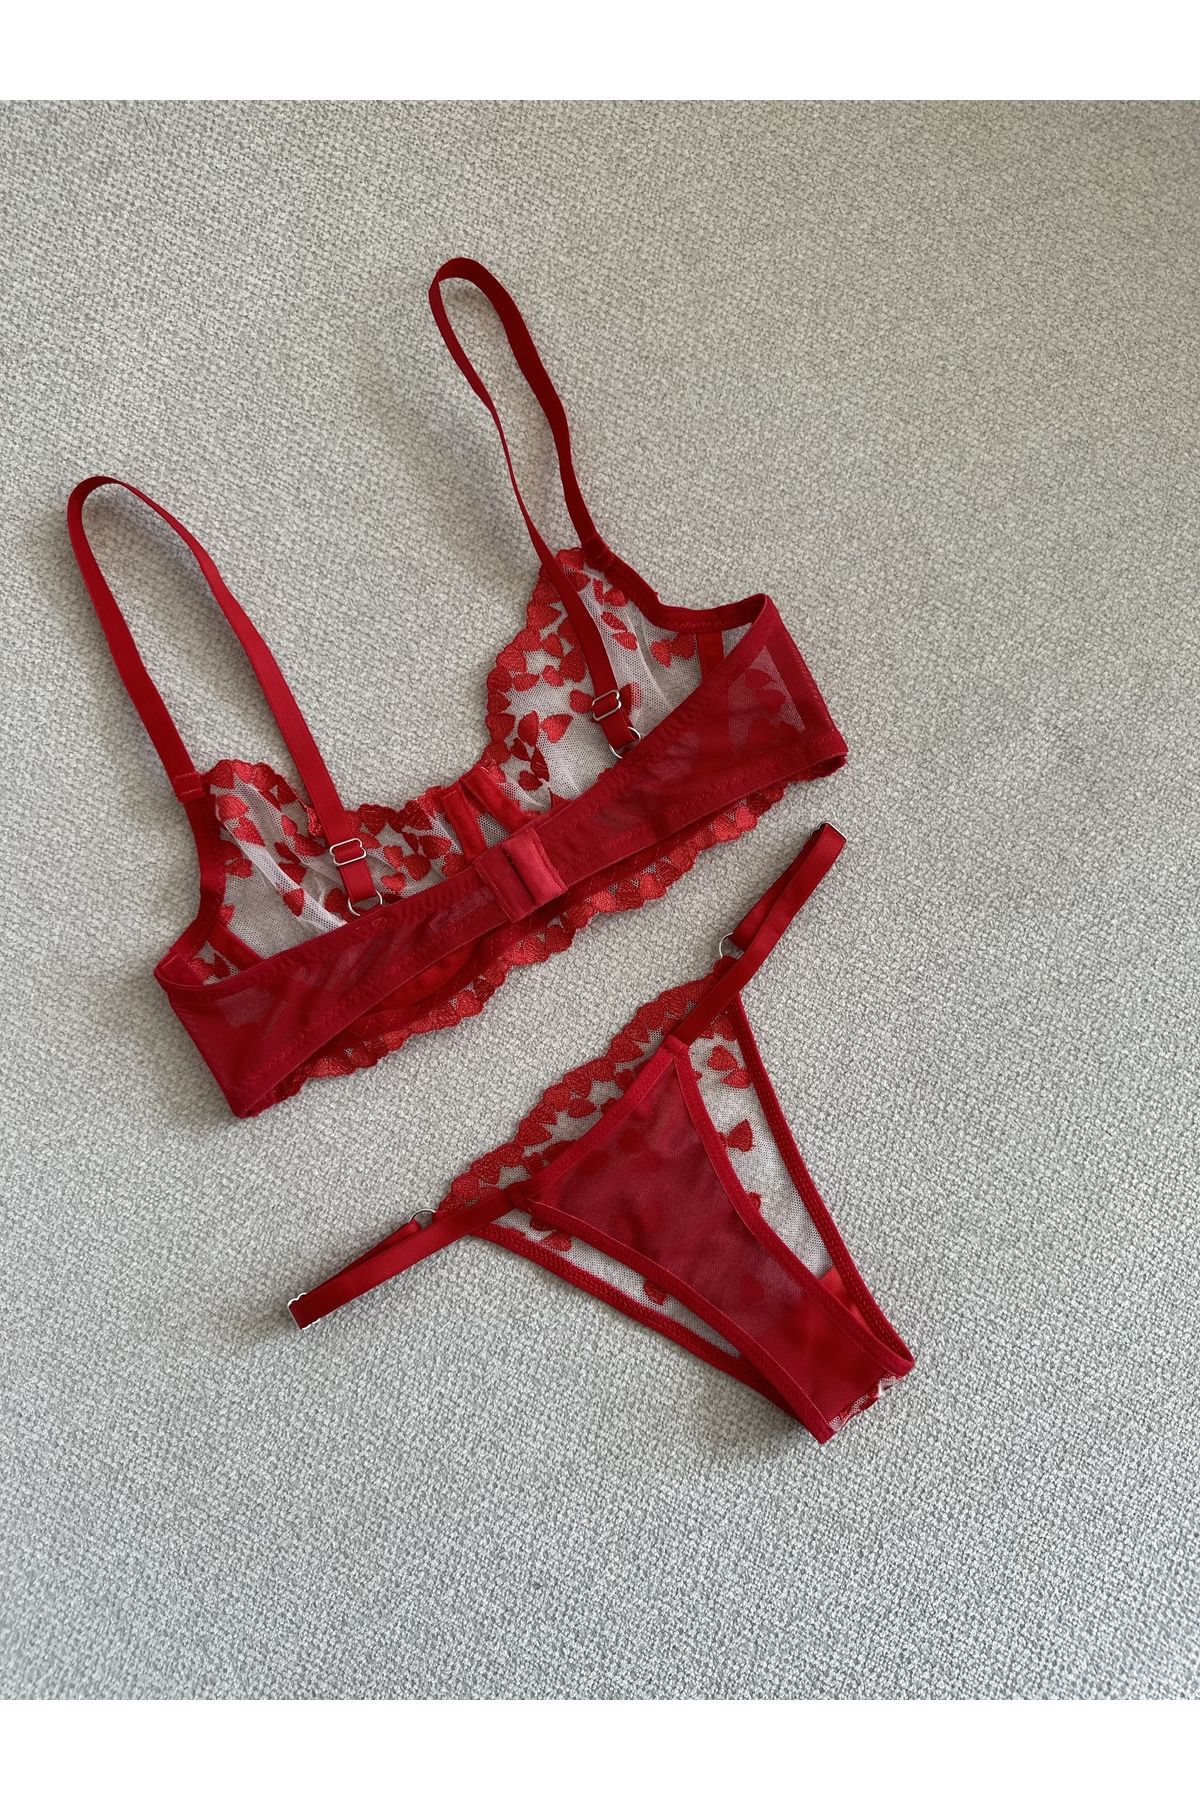 ESİLORA Women's Heart Lace Red Design Underwear Set Bra Set